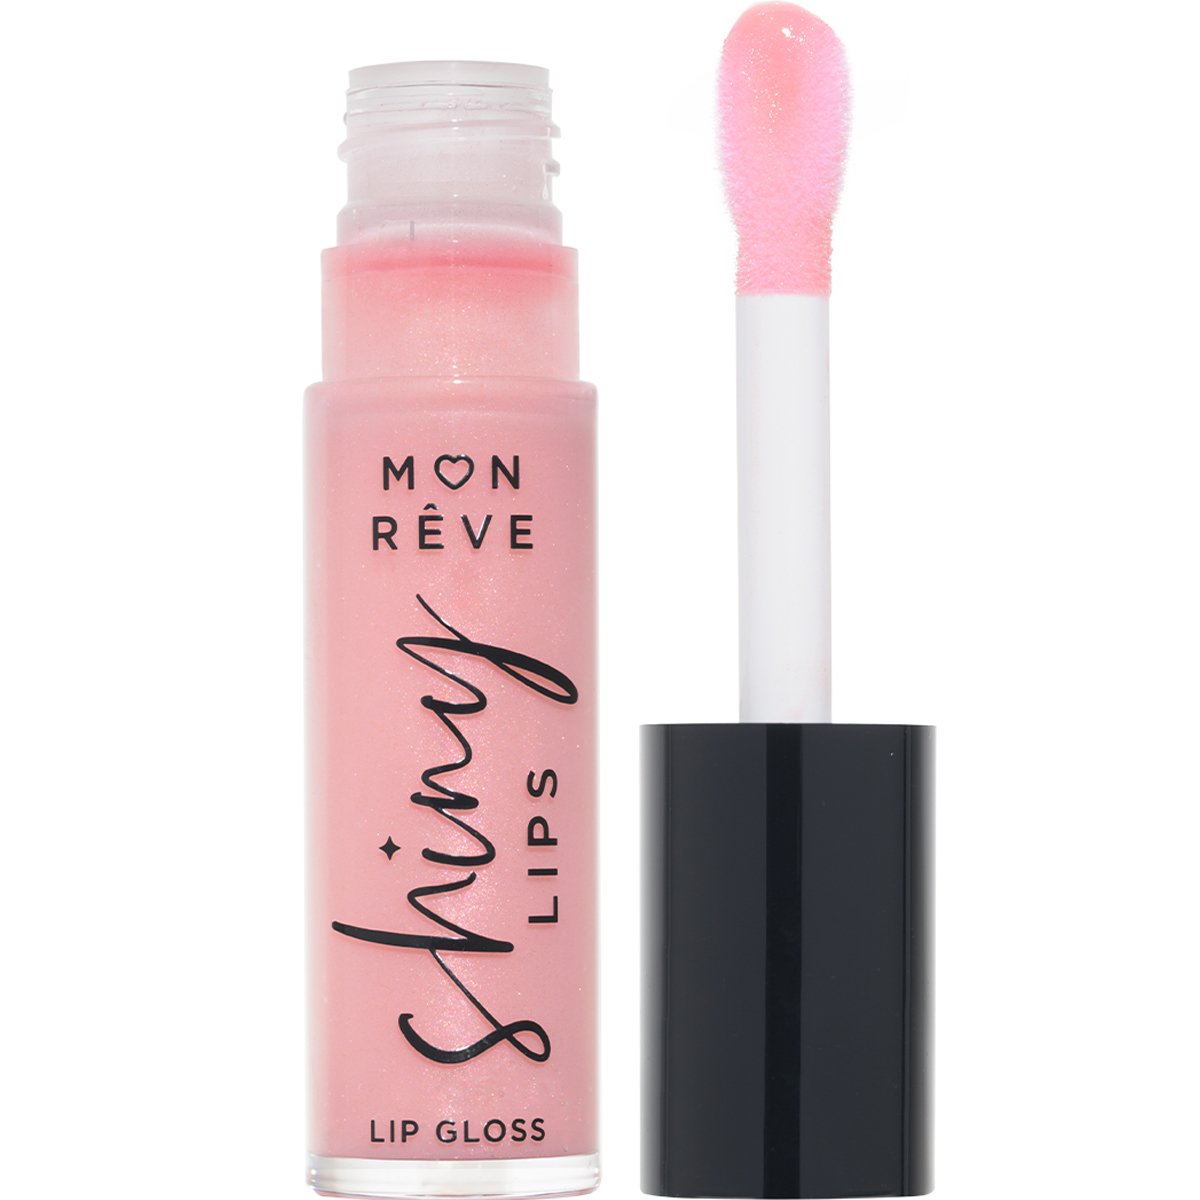 Mon Reve Shiny Lips Ενυδατικό, Ultra-Shiny Lip Gloss Μεγάλης Διάρκειας σε Ροζ Ιριδίζουσα Απόχρωση για Αστραφτερή Λάμψη 8ml - 02 Volumizing